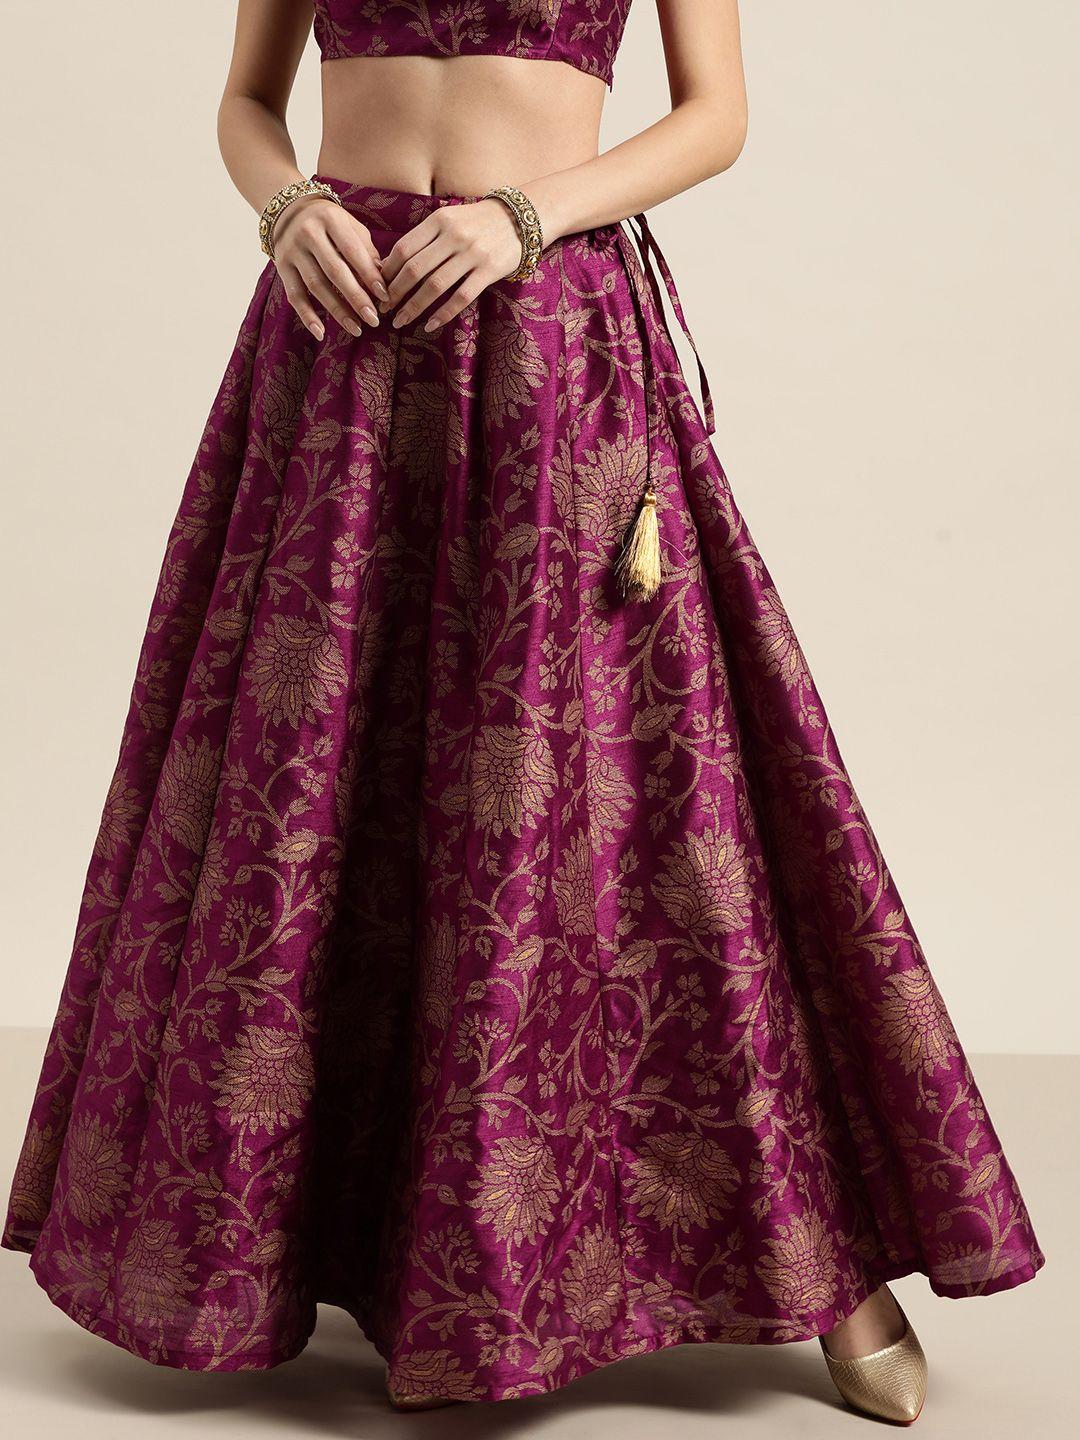 shae by sassafras charming purple floral jacquard skirt